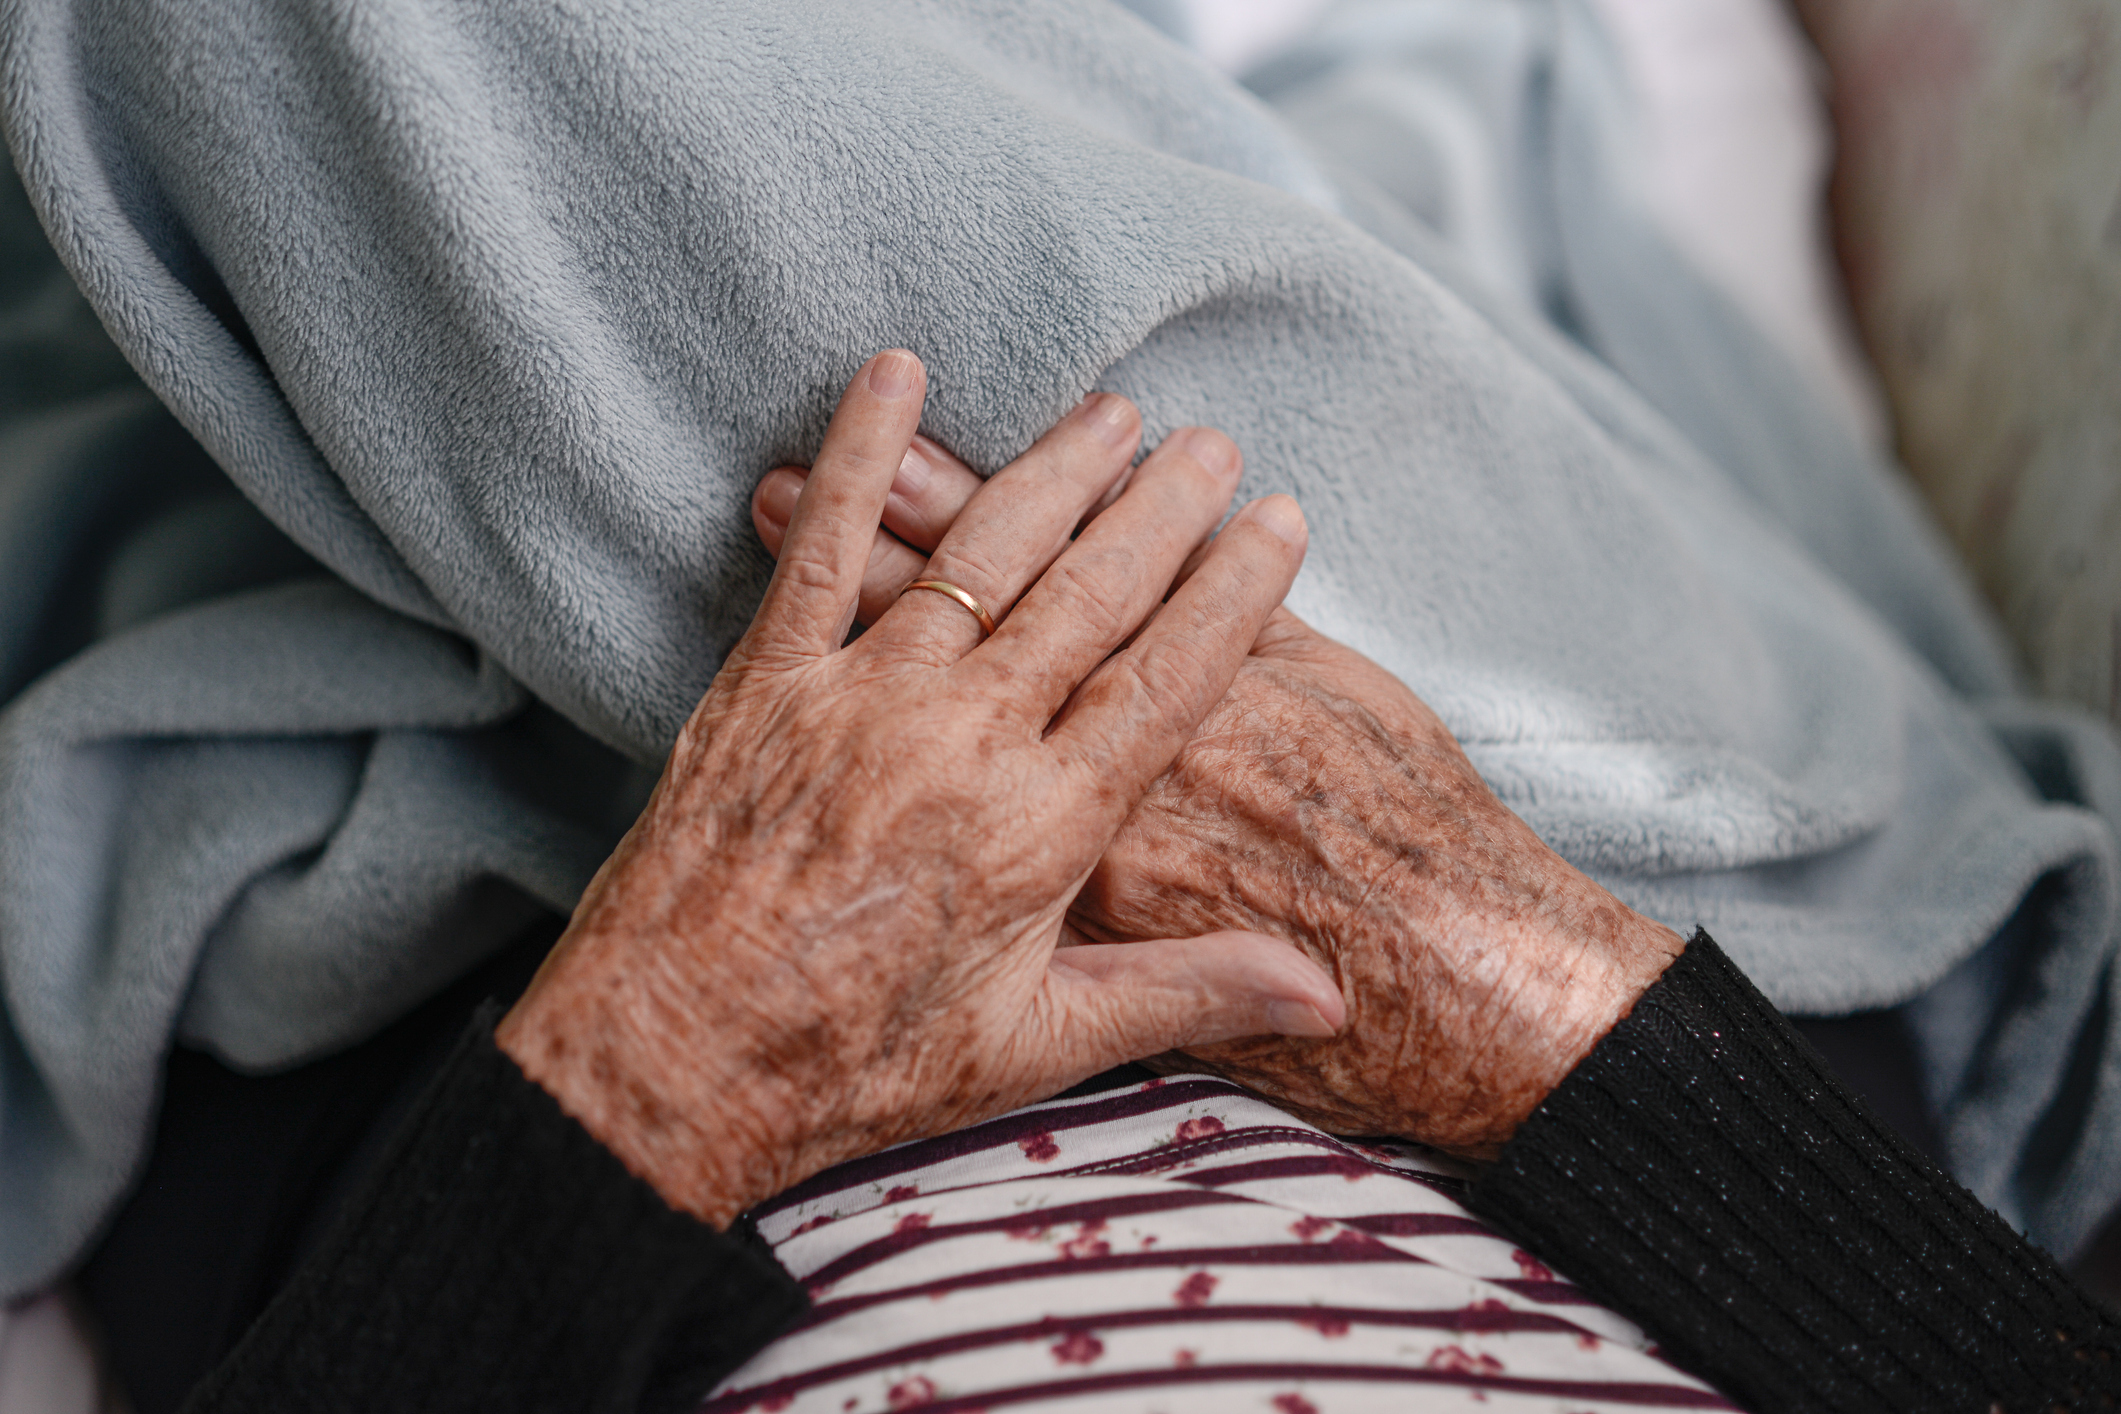 Hands of an elderly woman resting